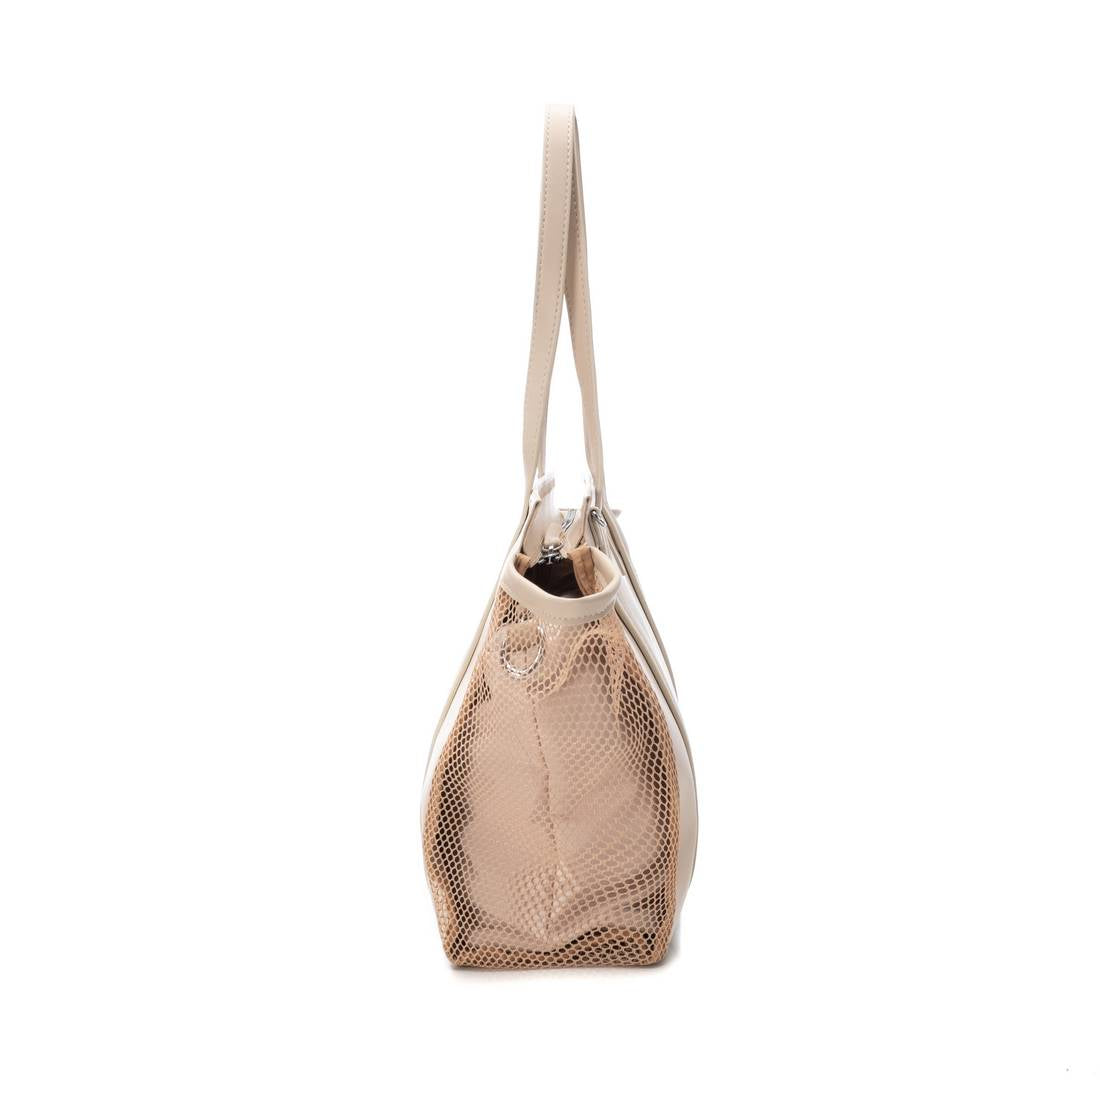 Refresh - Handbag with Body Strap in Beige 183164